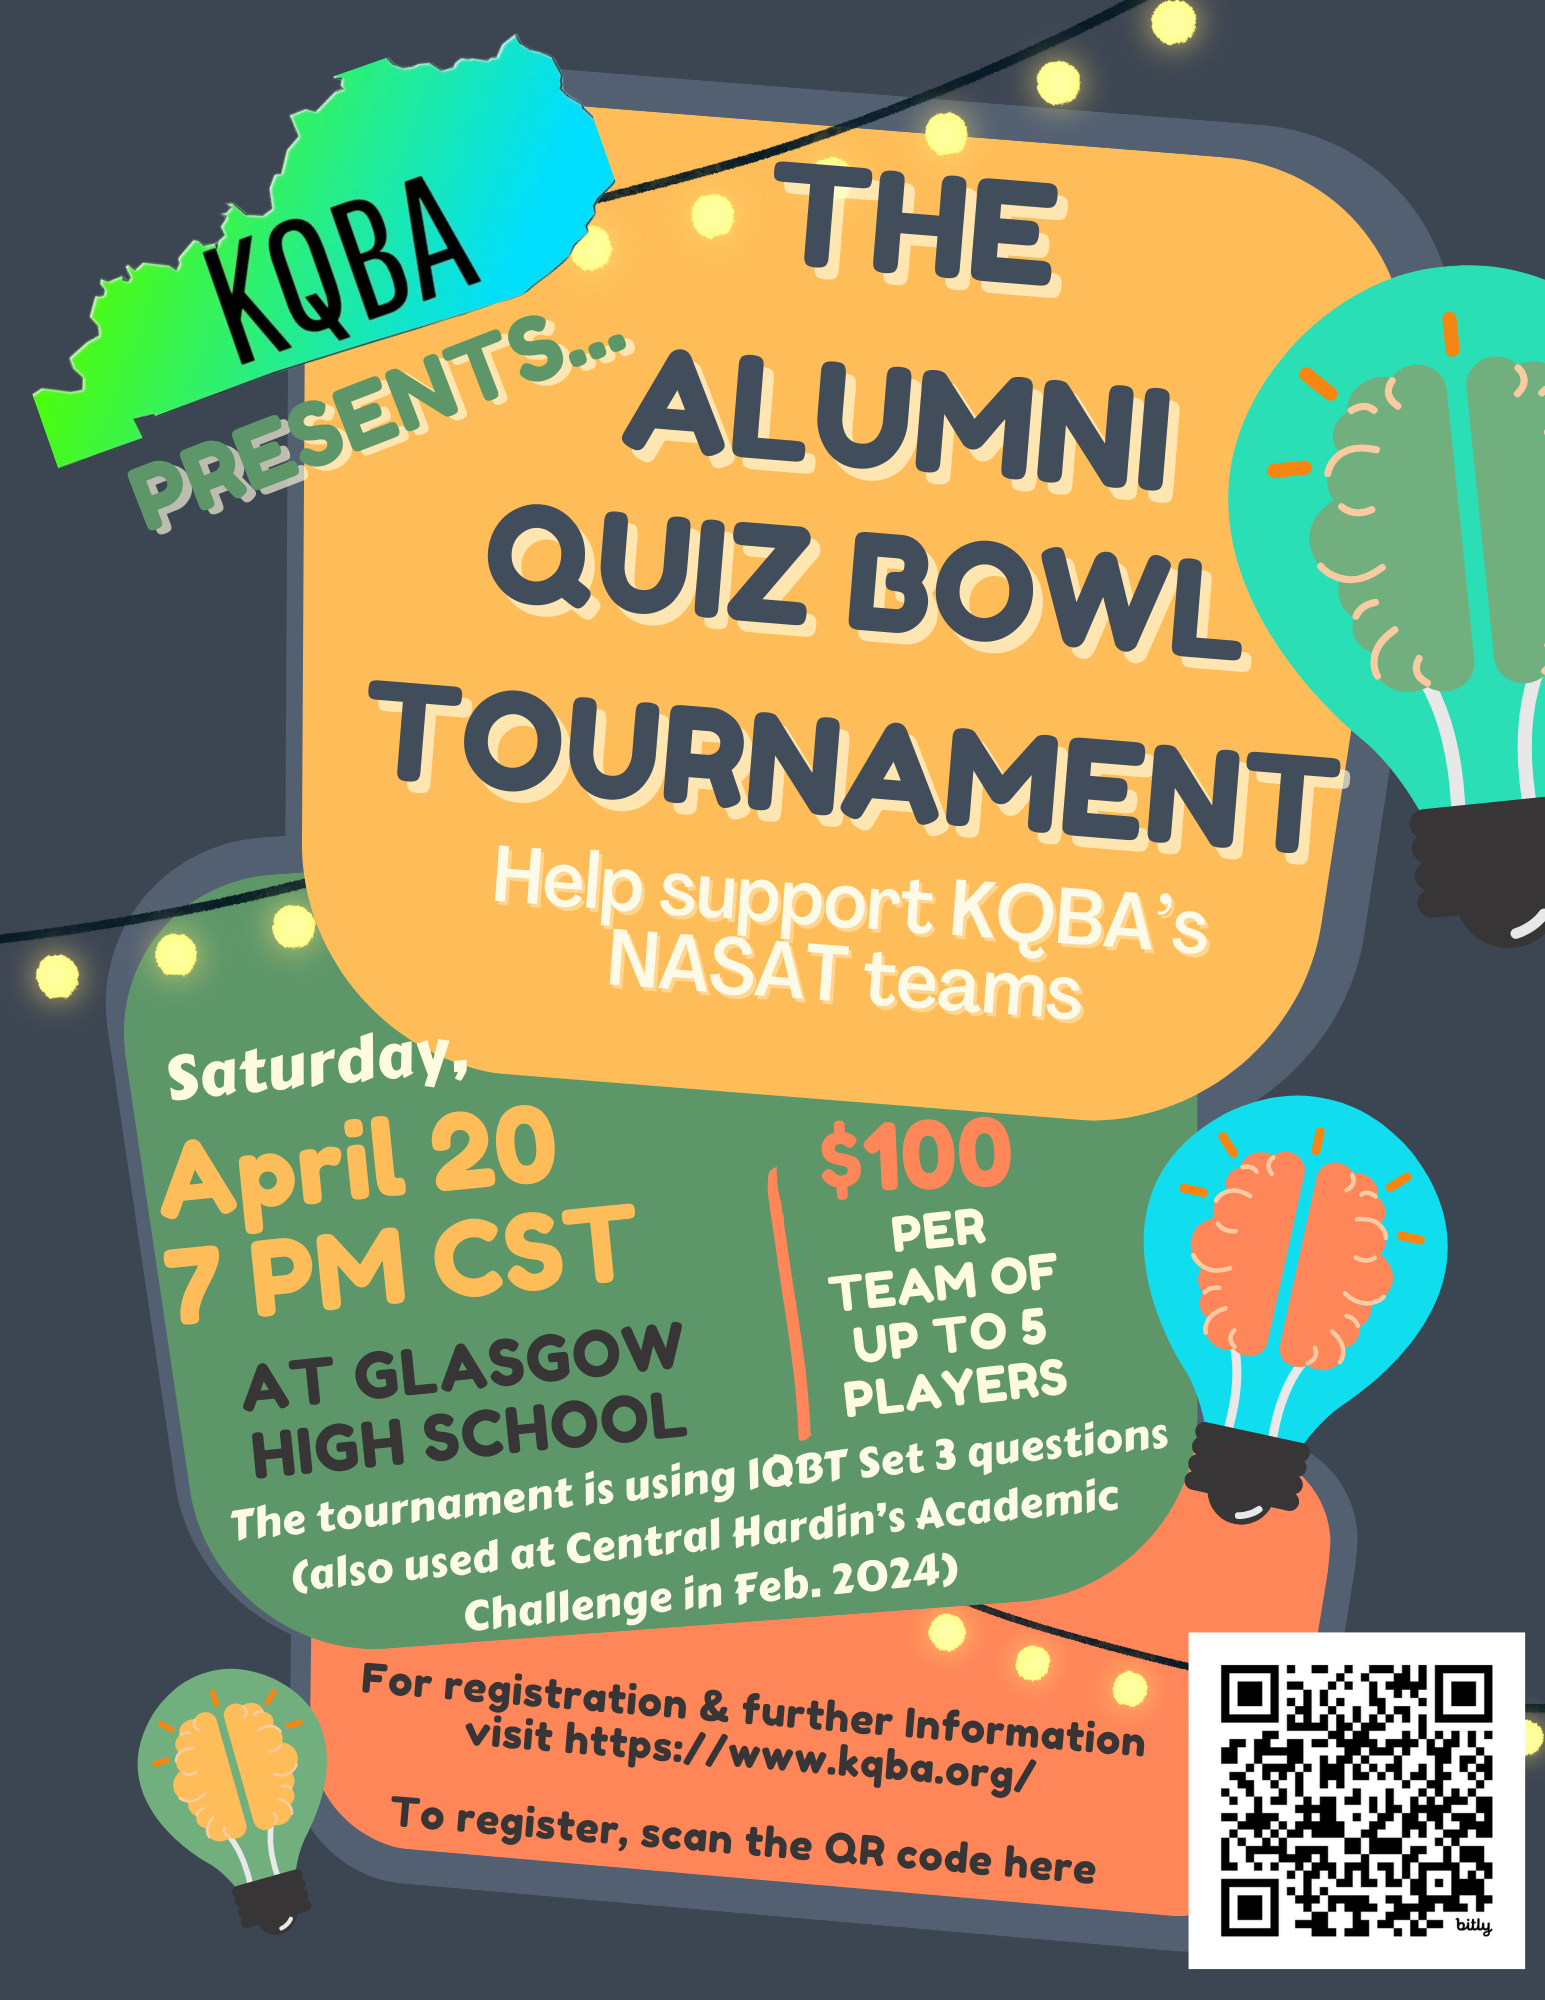 KQBA Alumni Tournament Announcement